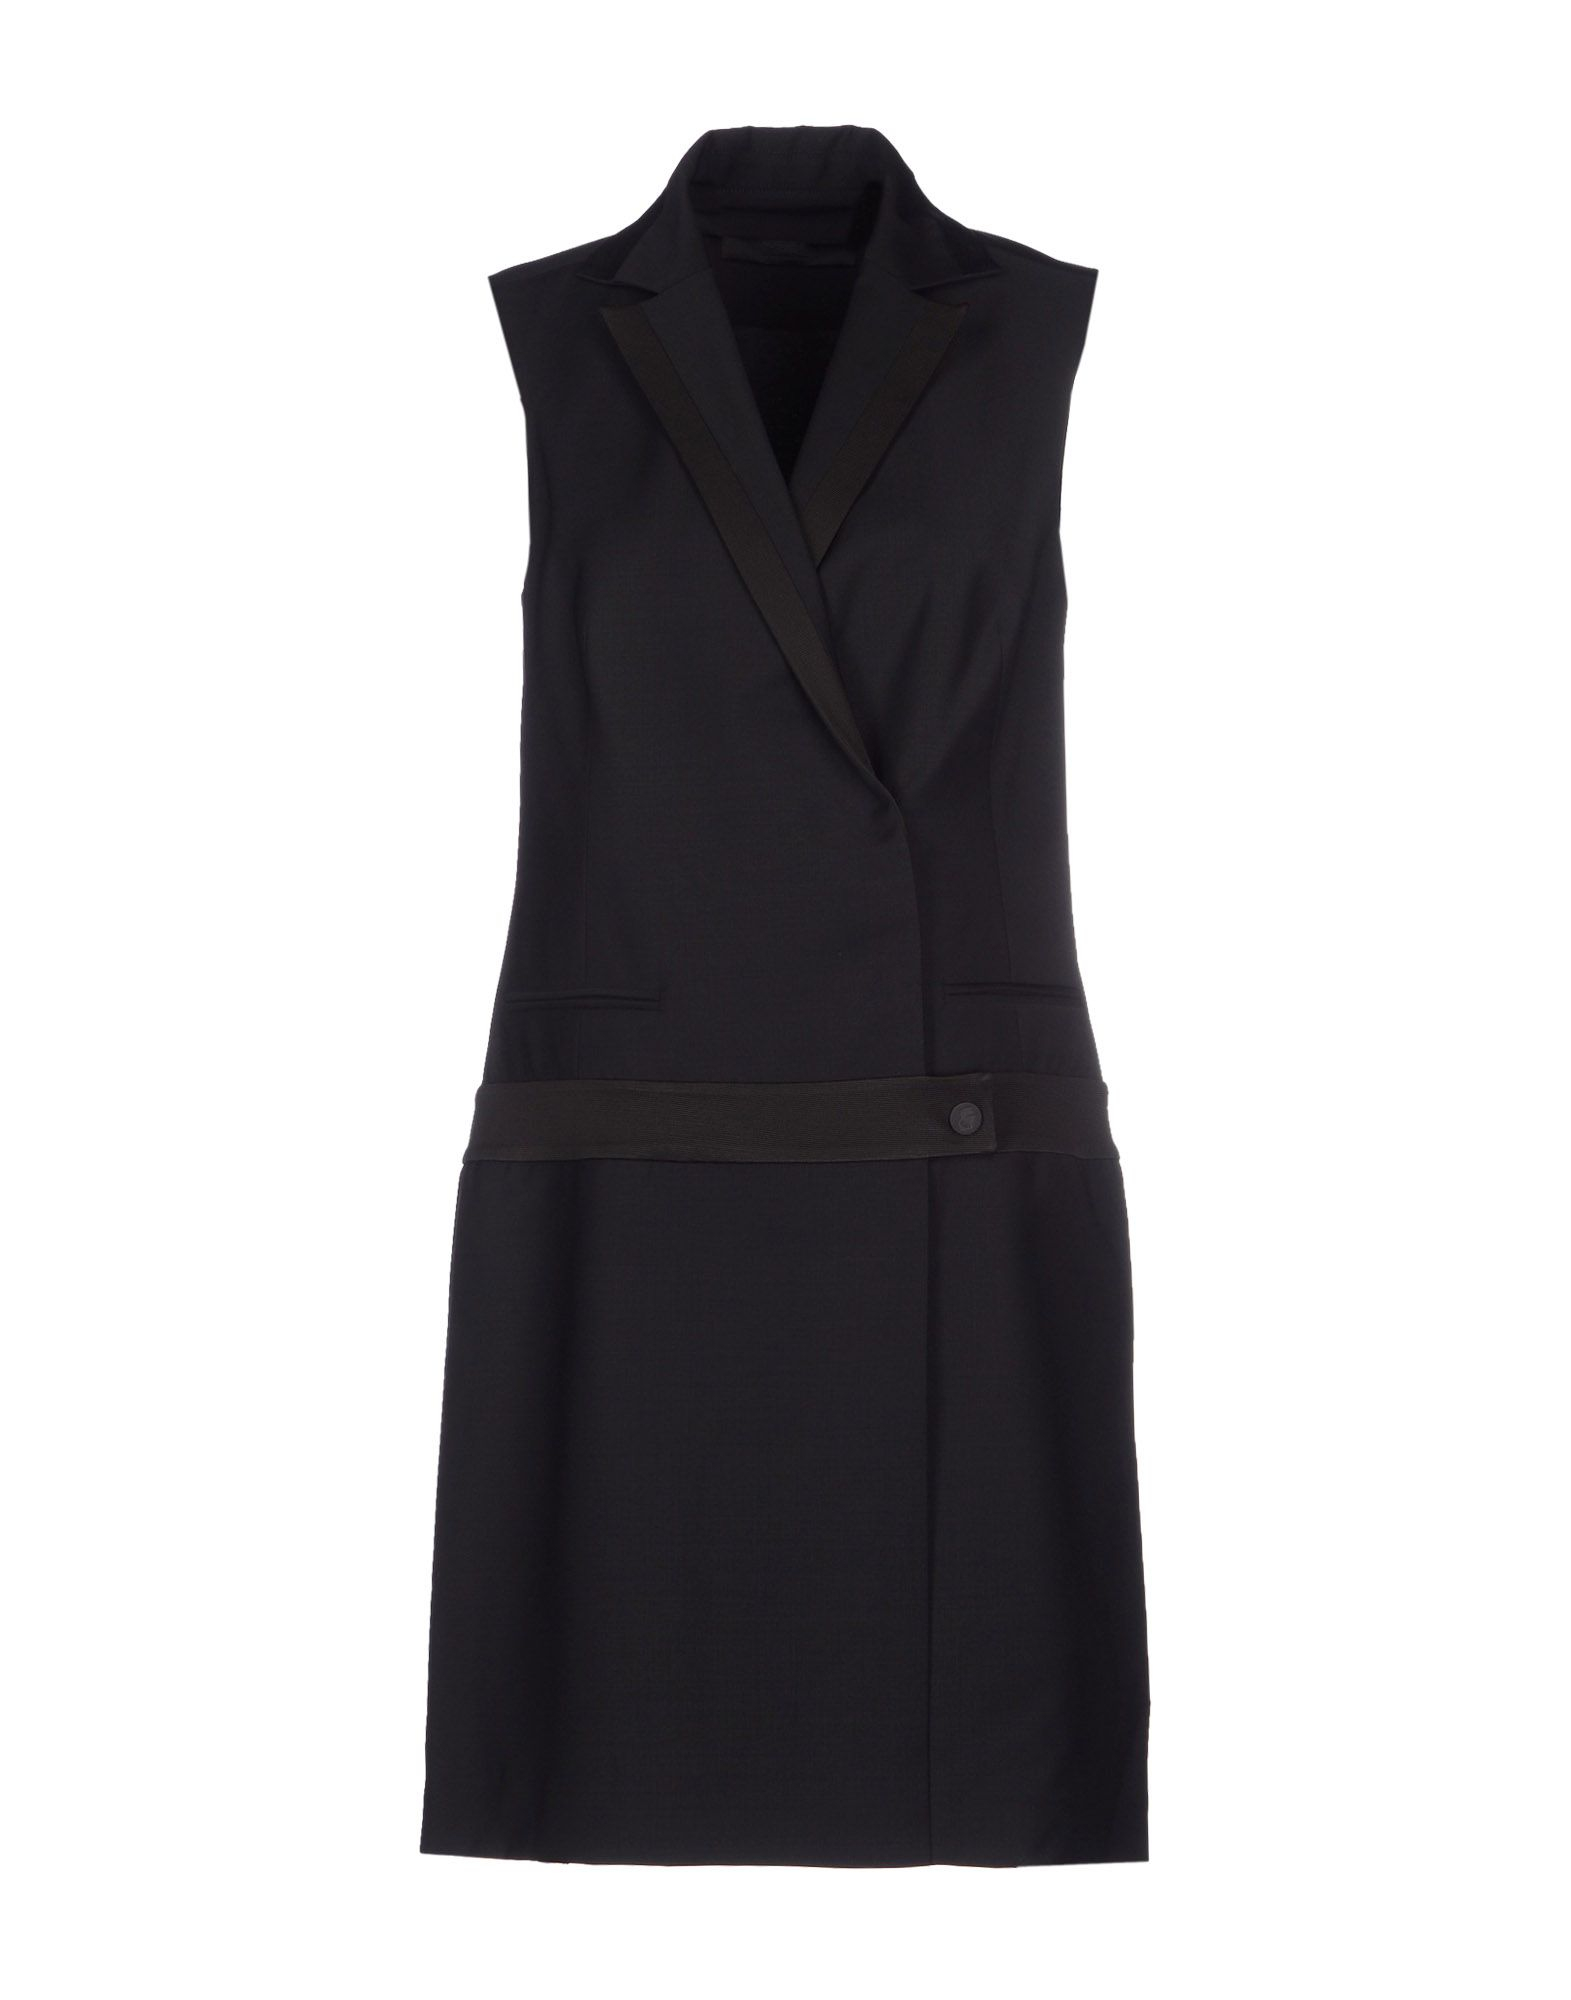 Lyst - Karl Lagerfeld Short Dress in Black